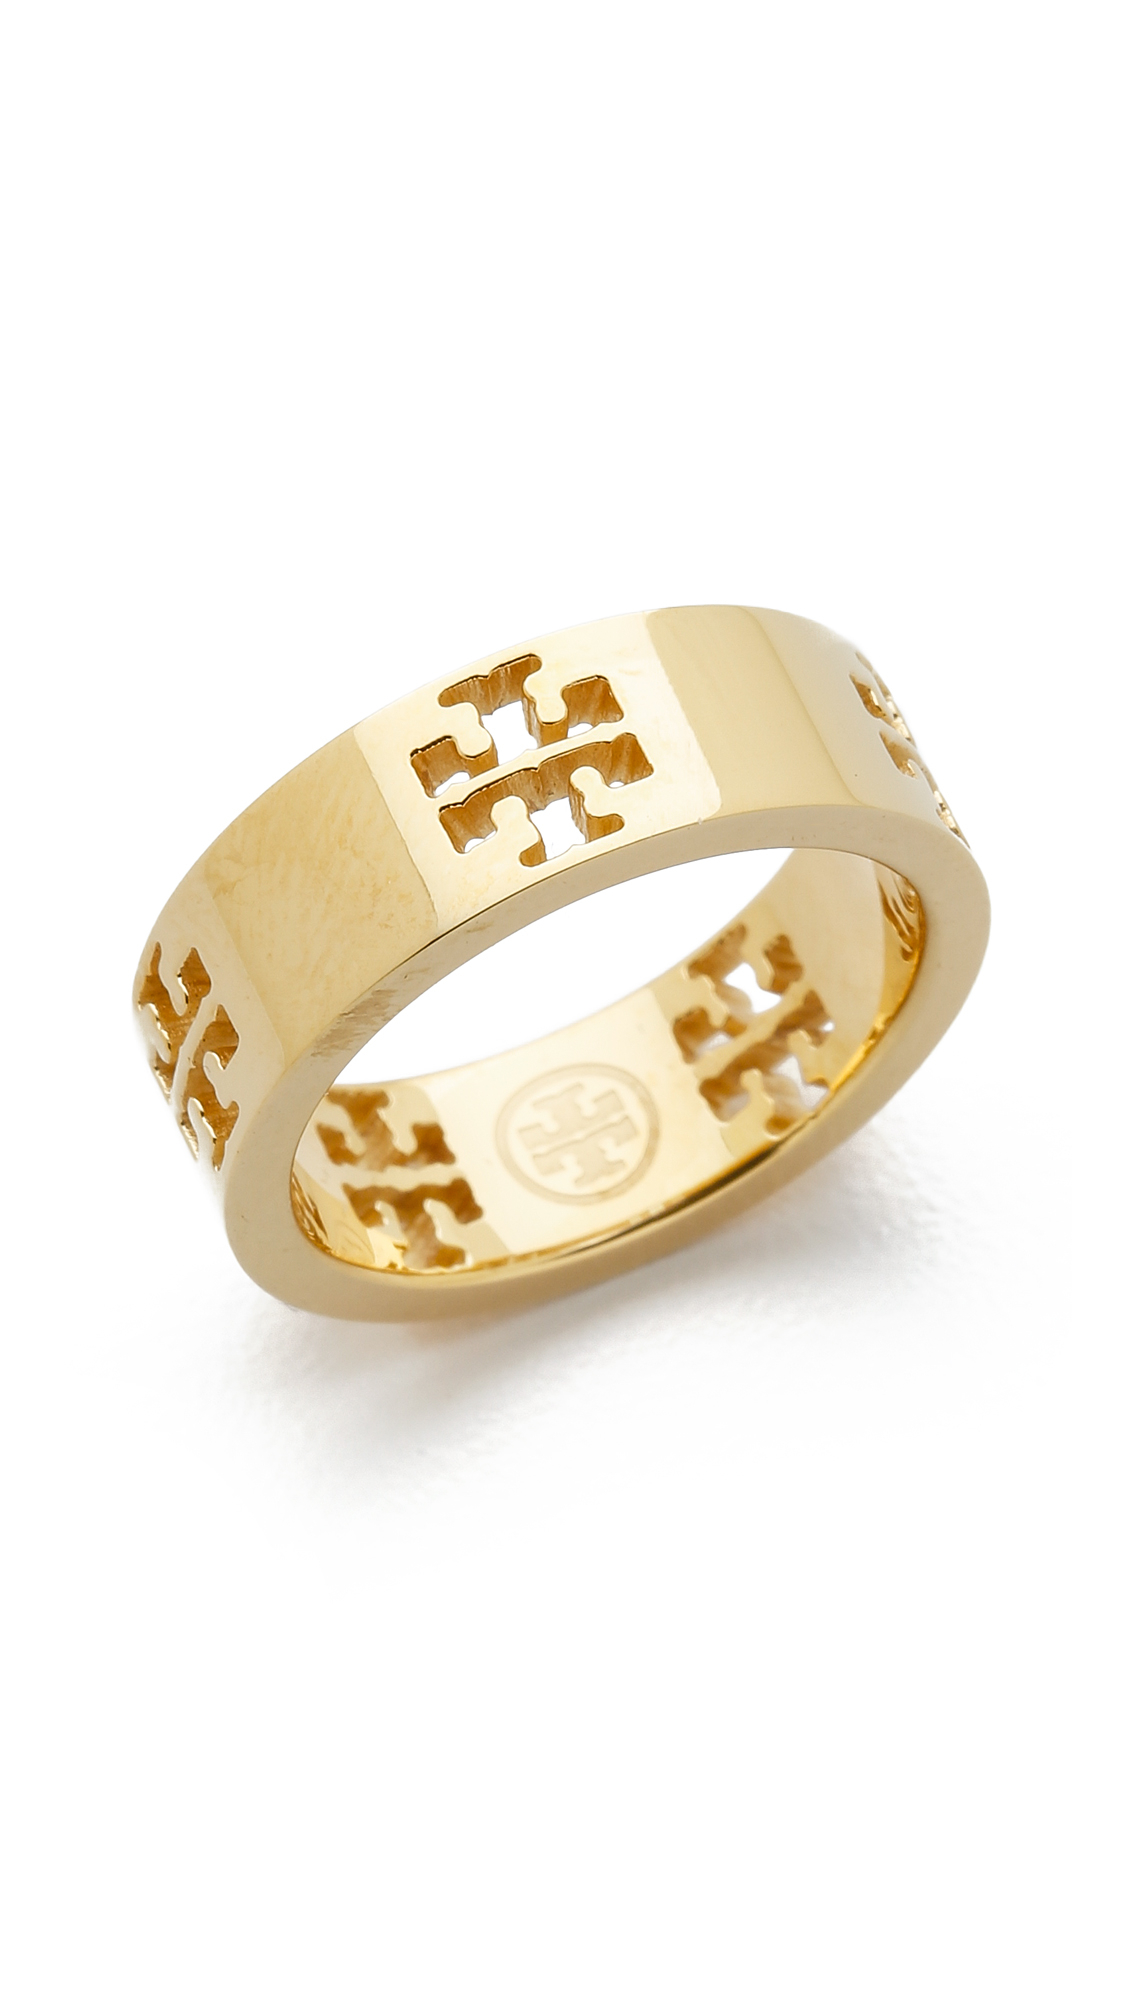 Lyst Tory Burch Pierced T Ring Shiny Gold in Metallic